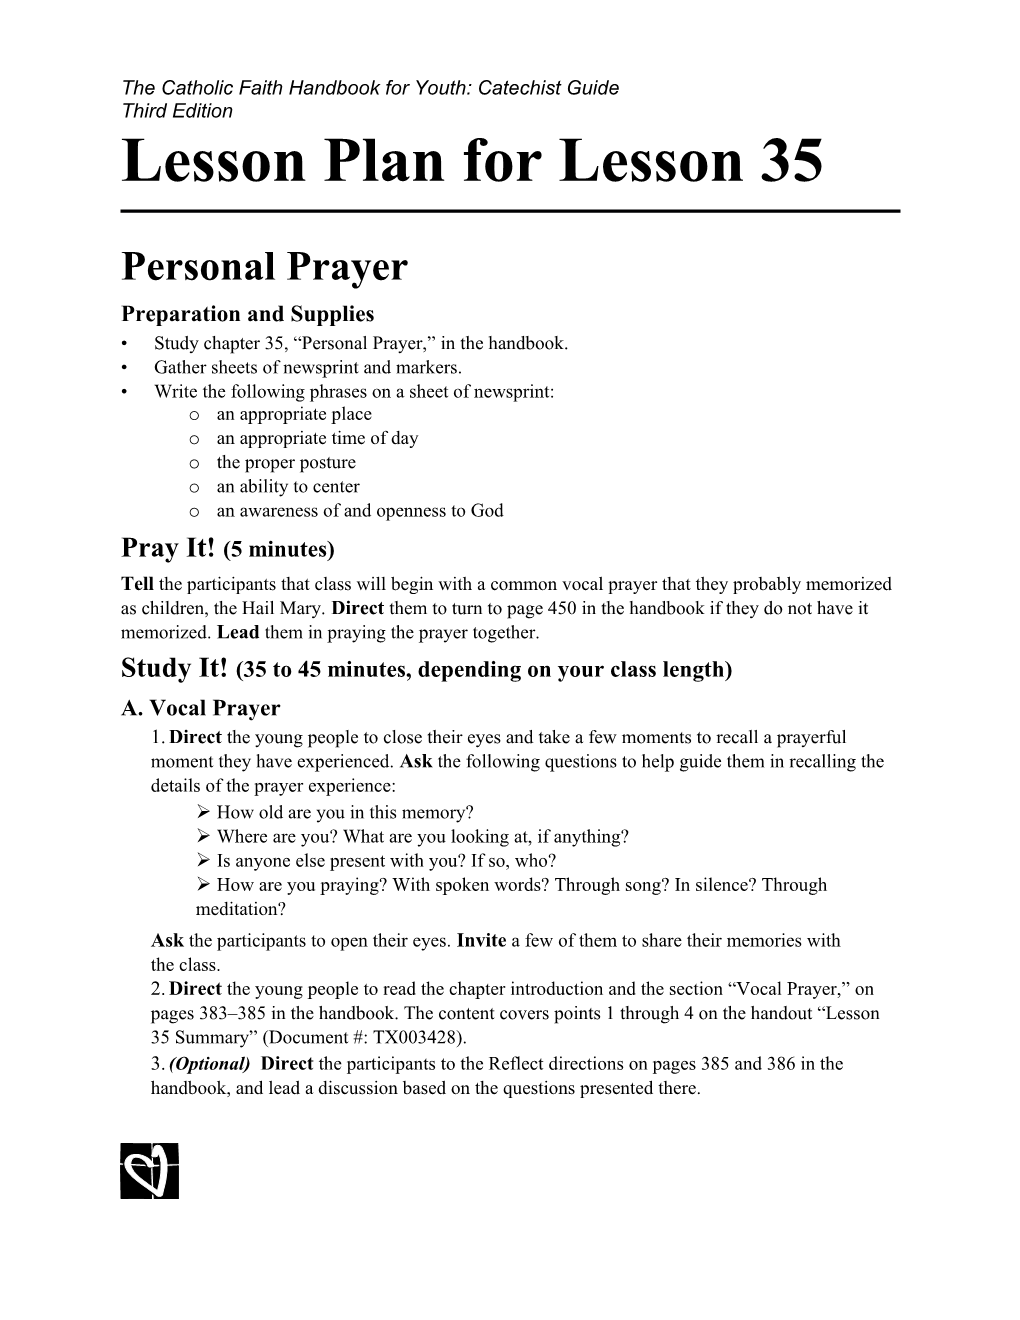 Lesson Plan for Lesson 35